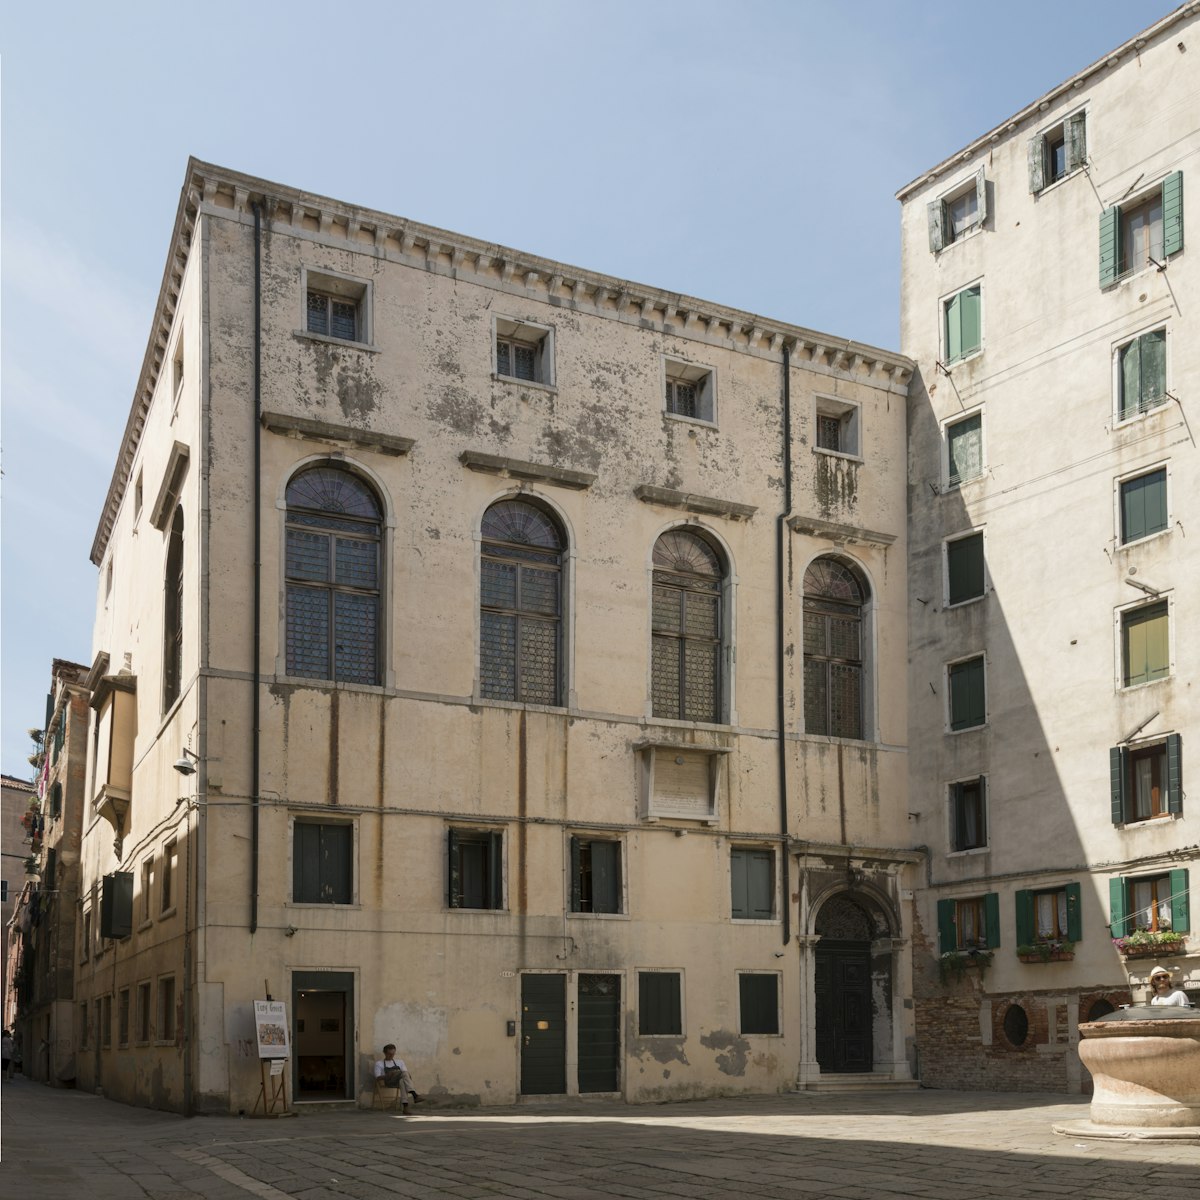 Spanish Synagogue in Venice – Facade on Campo delle Scole.

SOURCE: https://commons.wikimedia.org/wiki/File:Scola_spagnola_(Venice).jpg